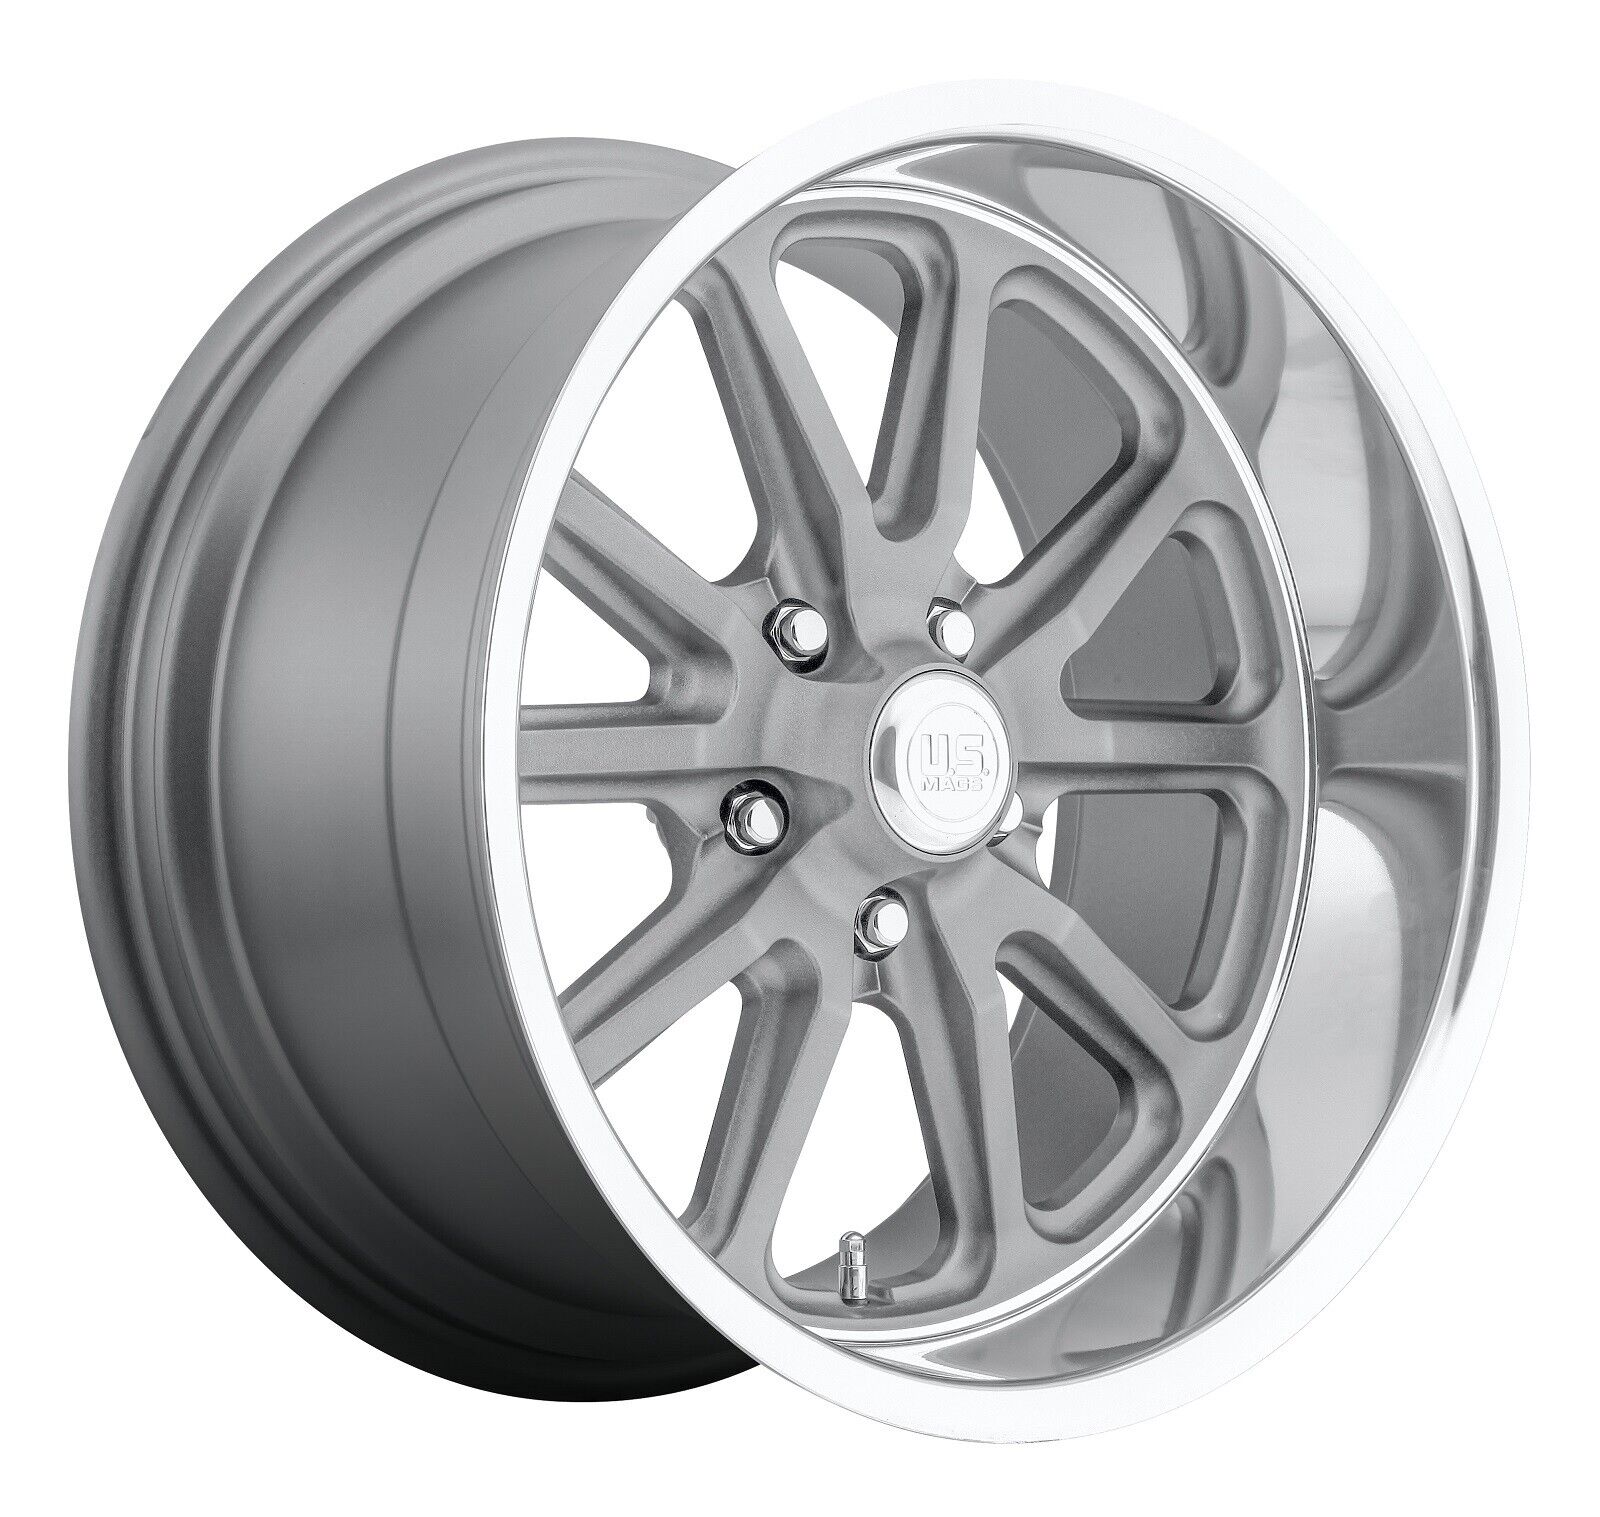 CPP US Mags U111 Rambler wheels 22x9 + 22x11 fits: CHEVY CAPRICE IMPALA SS